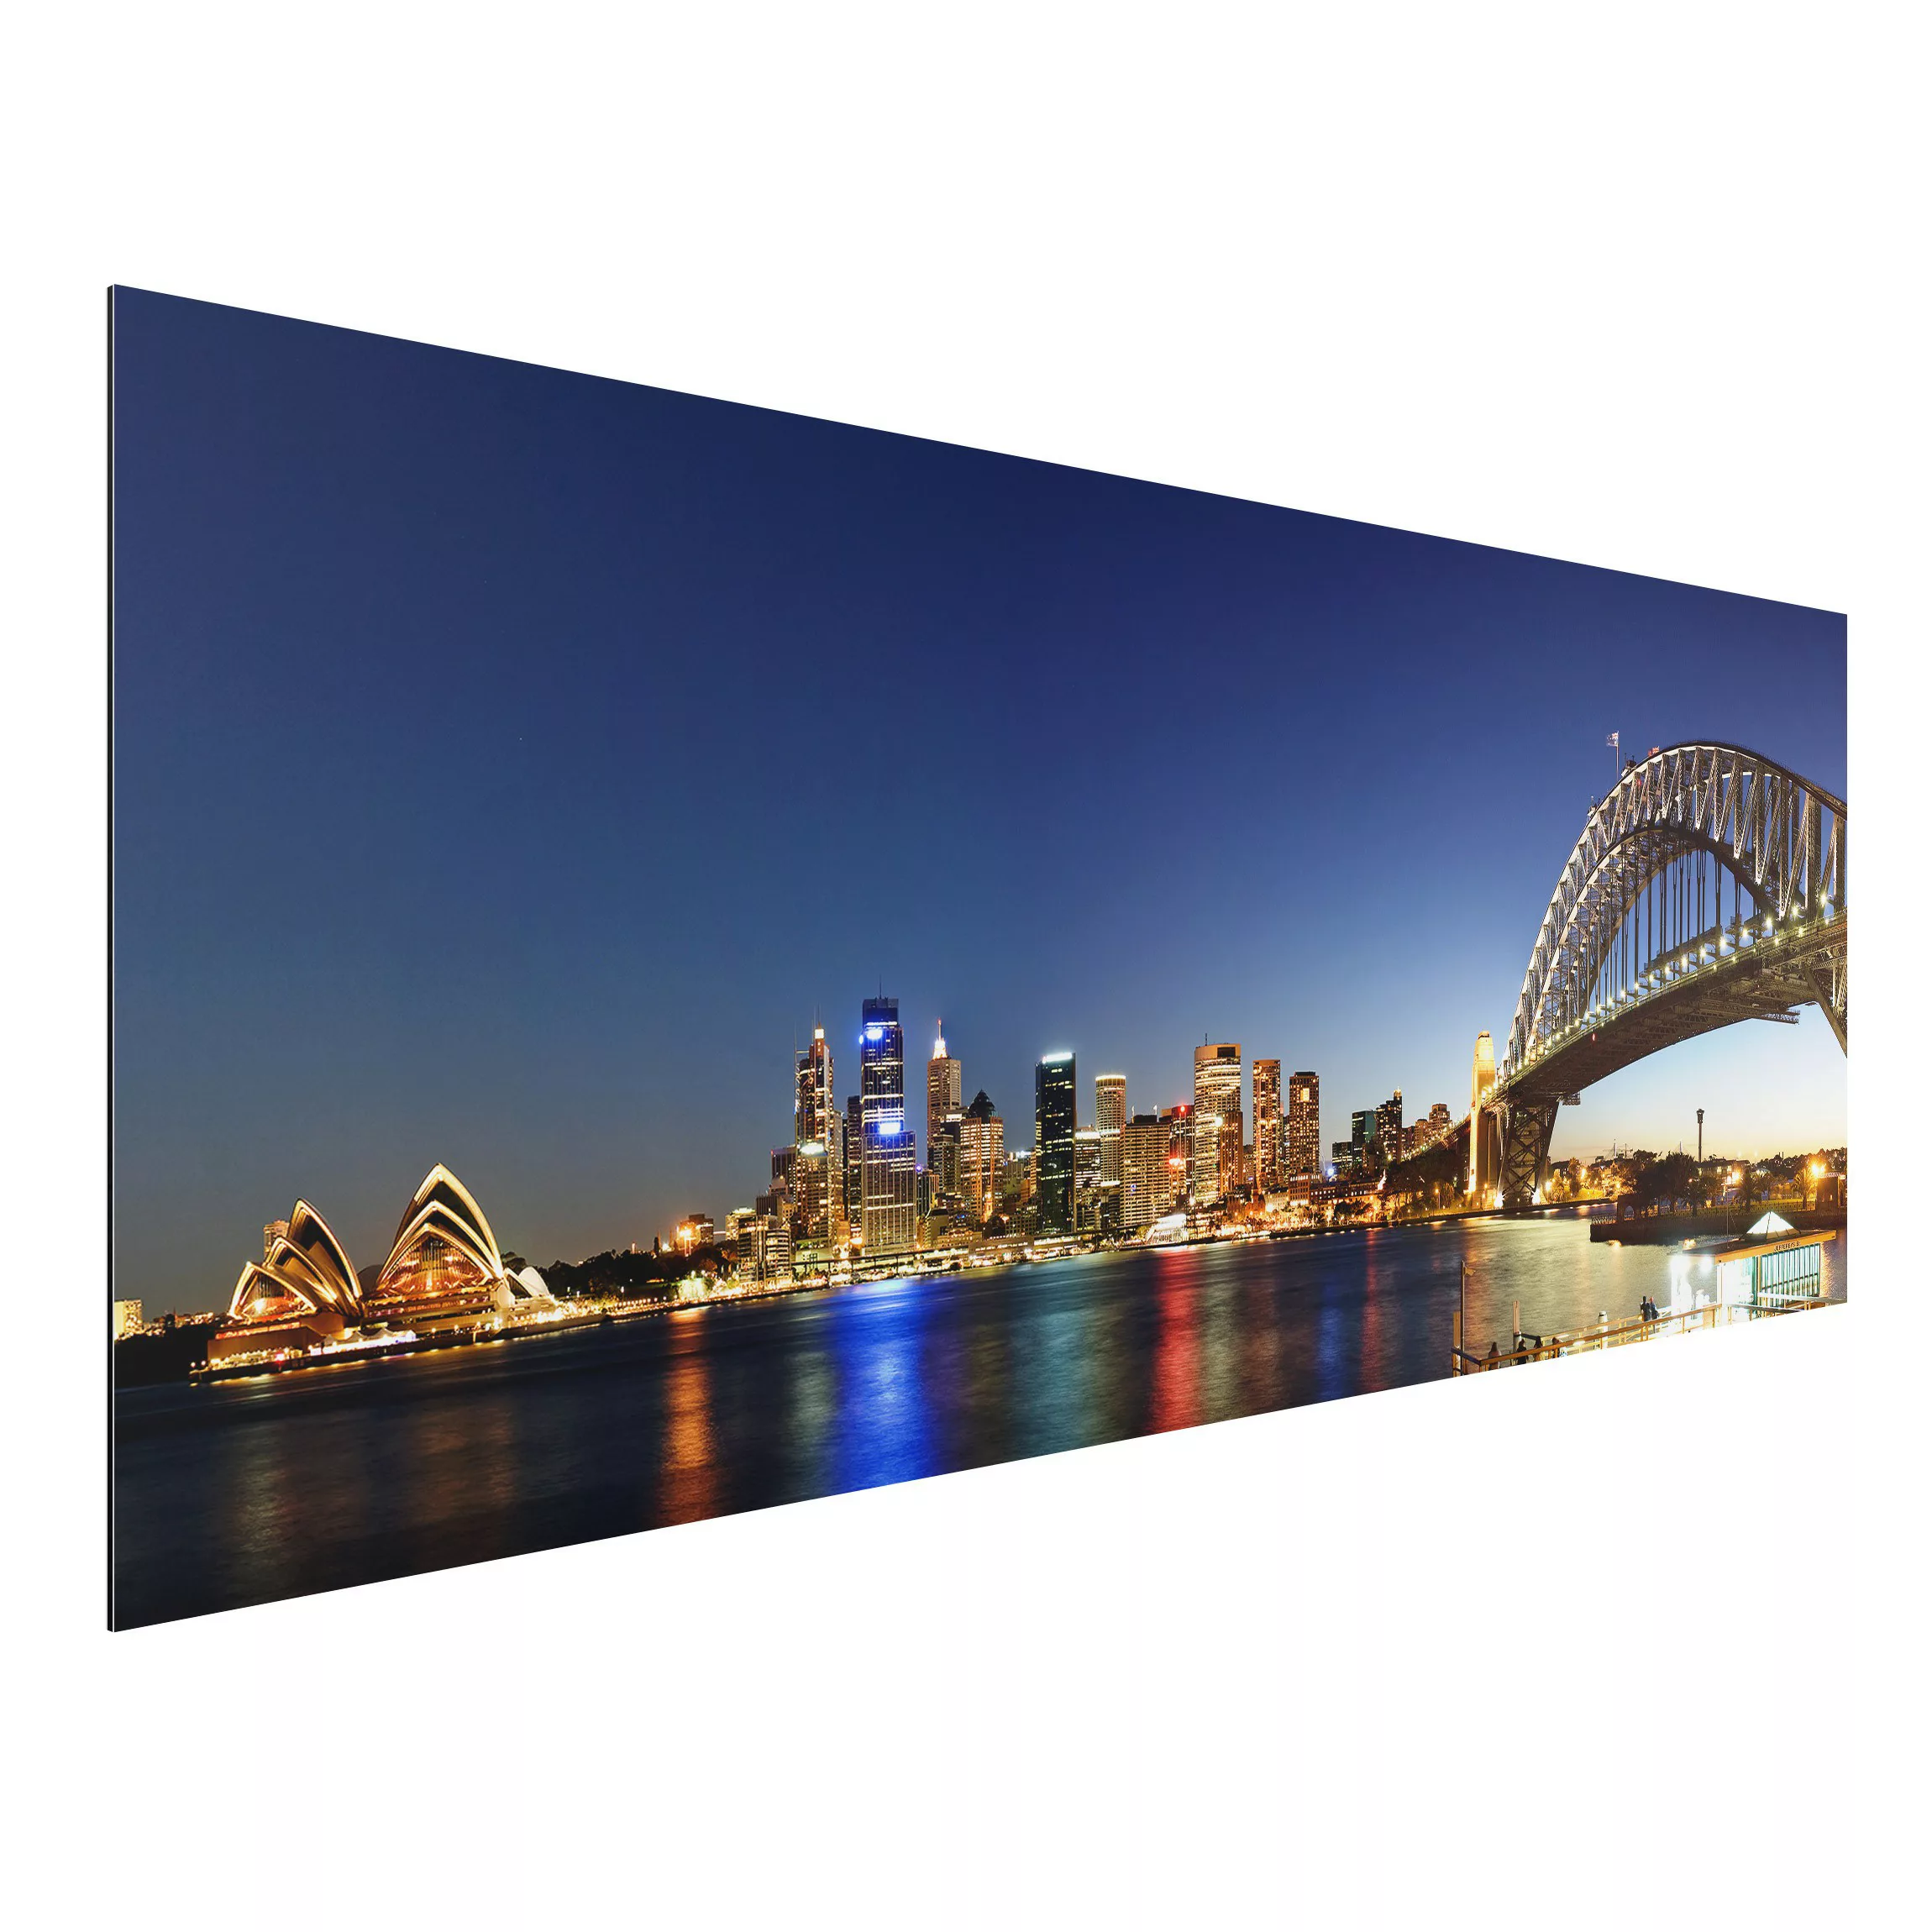 Alu-Dibond Bild Architekur & Skyline - Panorama Sydney at Night günstig online kaufen